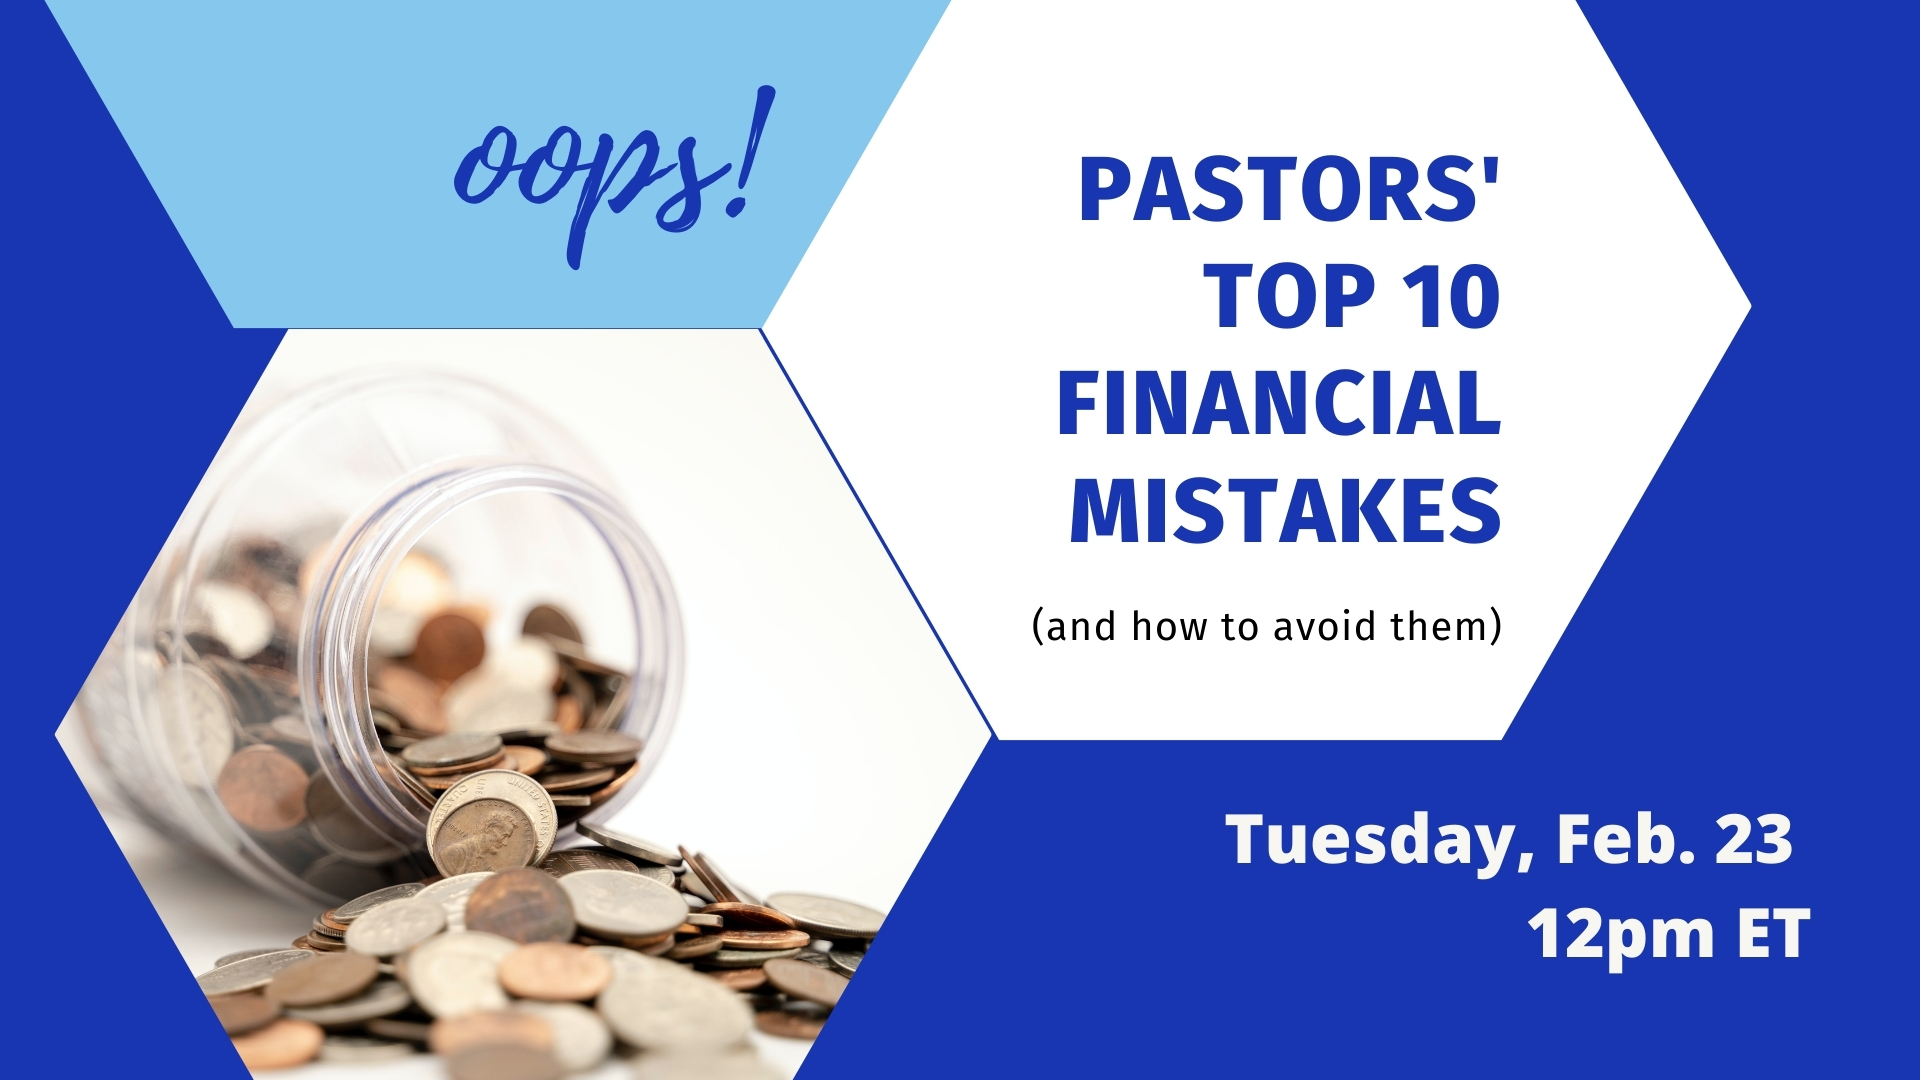 Top 10 Financial Mistakes Webinar